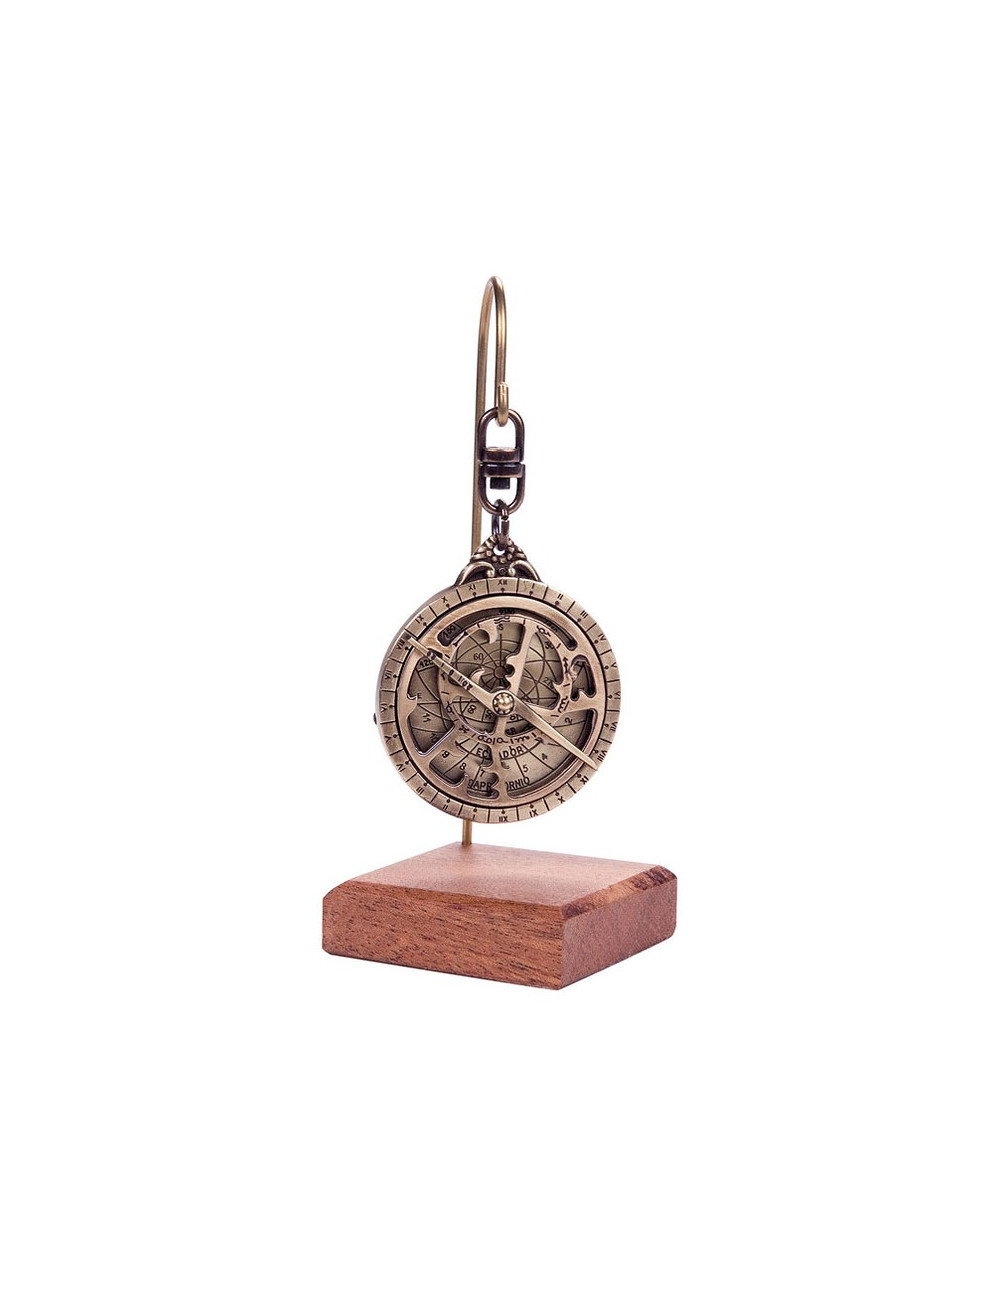 Astrolabe miniature